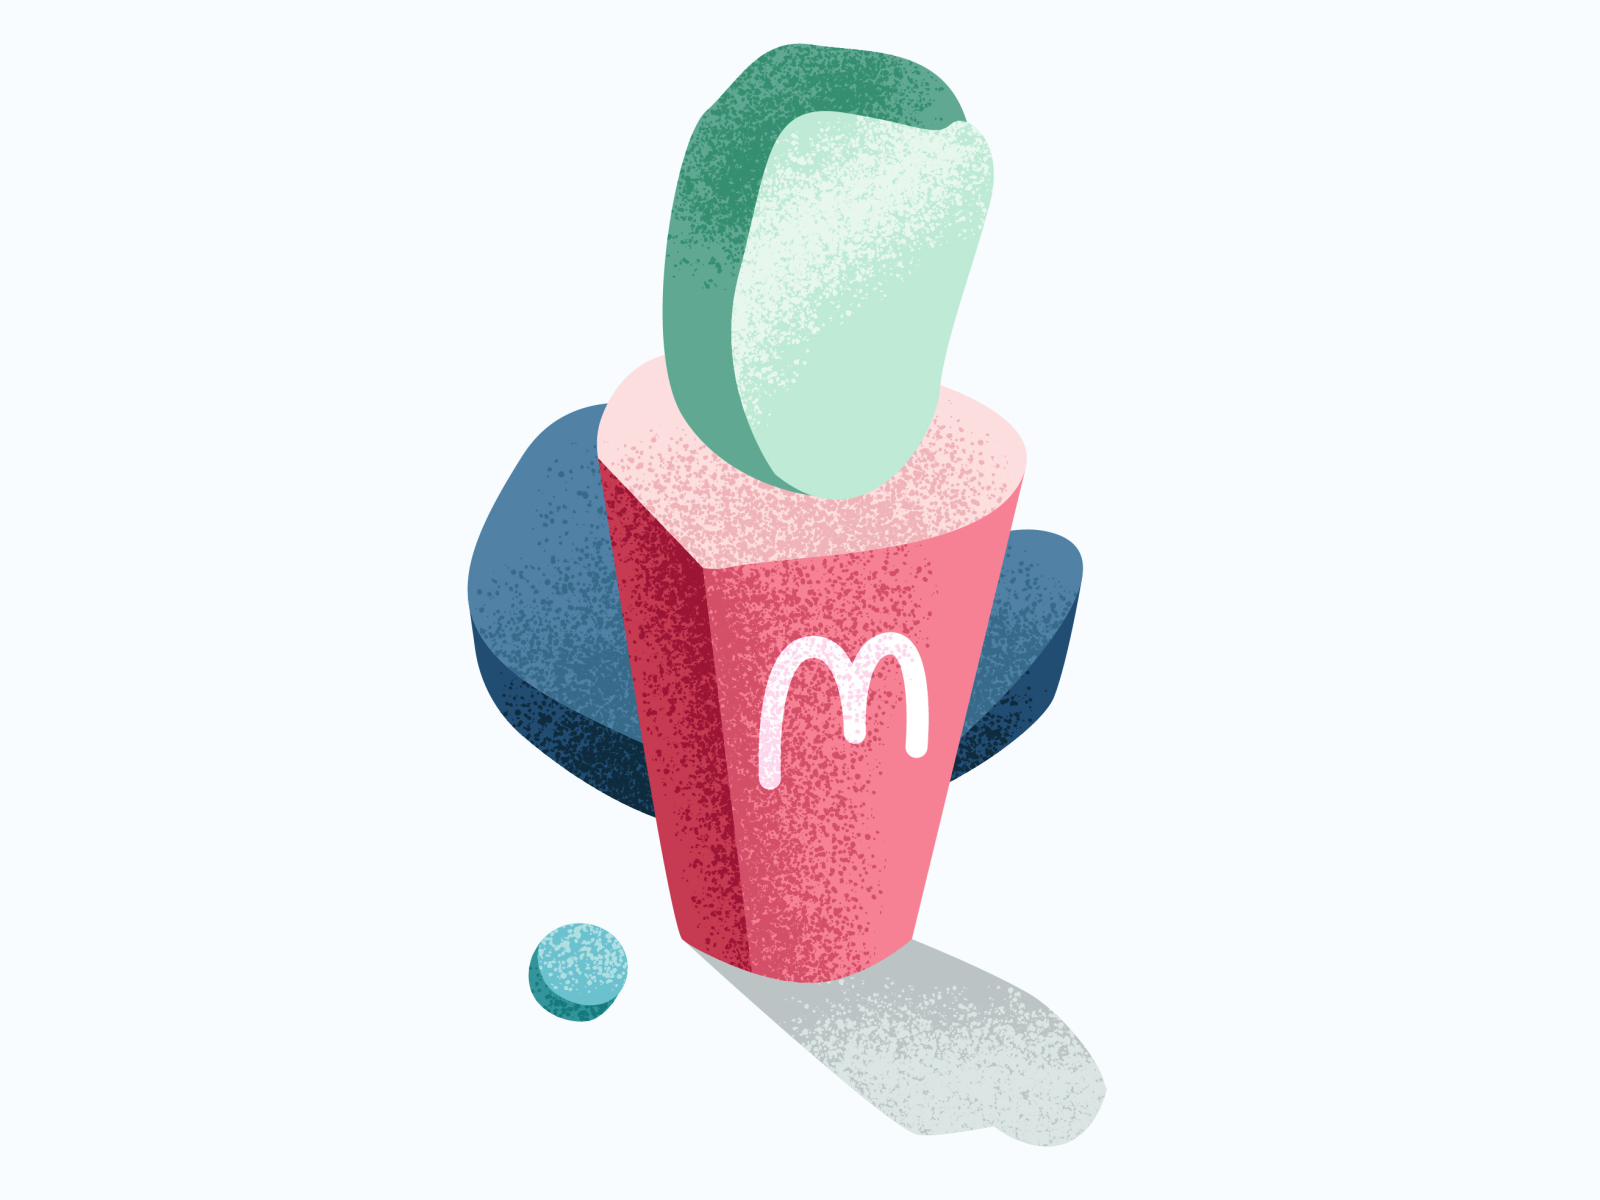 Ice cream design glass ice cream icon illustration mcdonalds vector